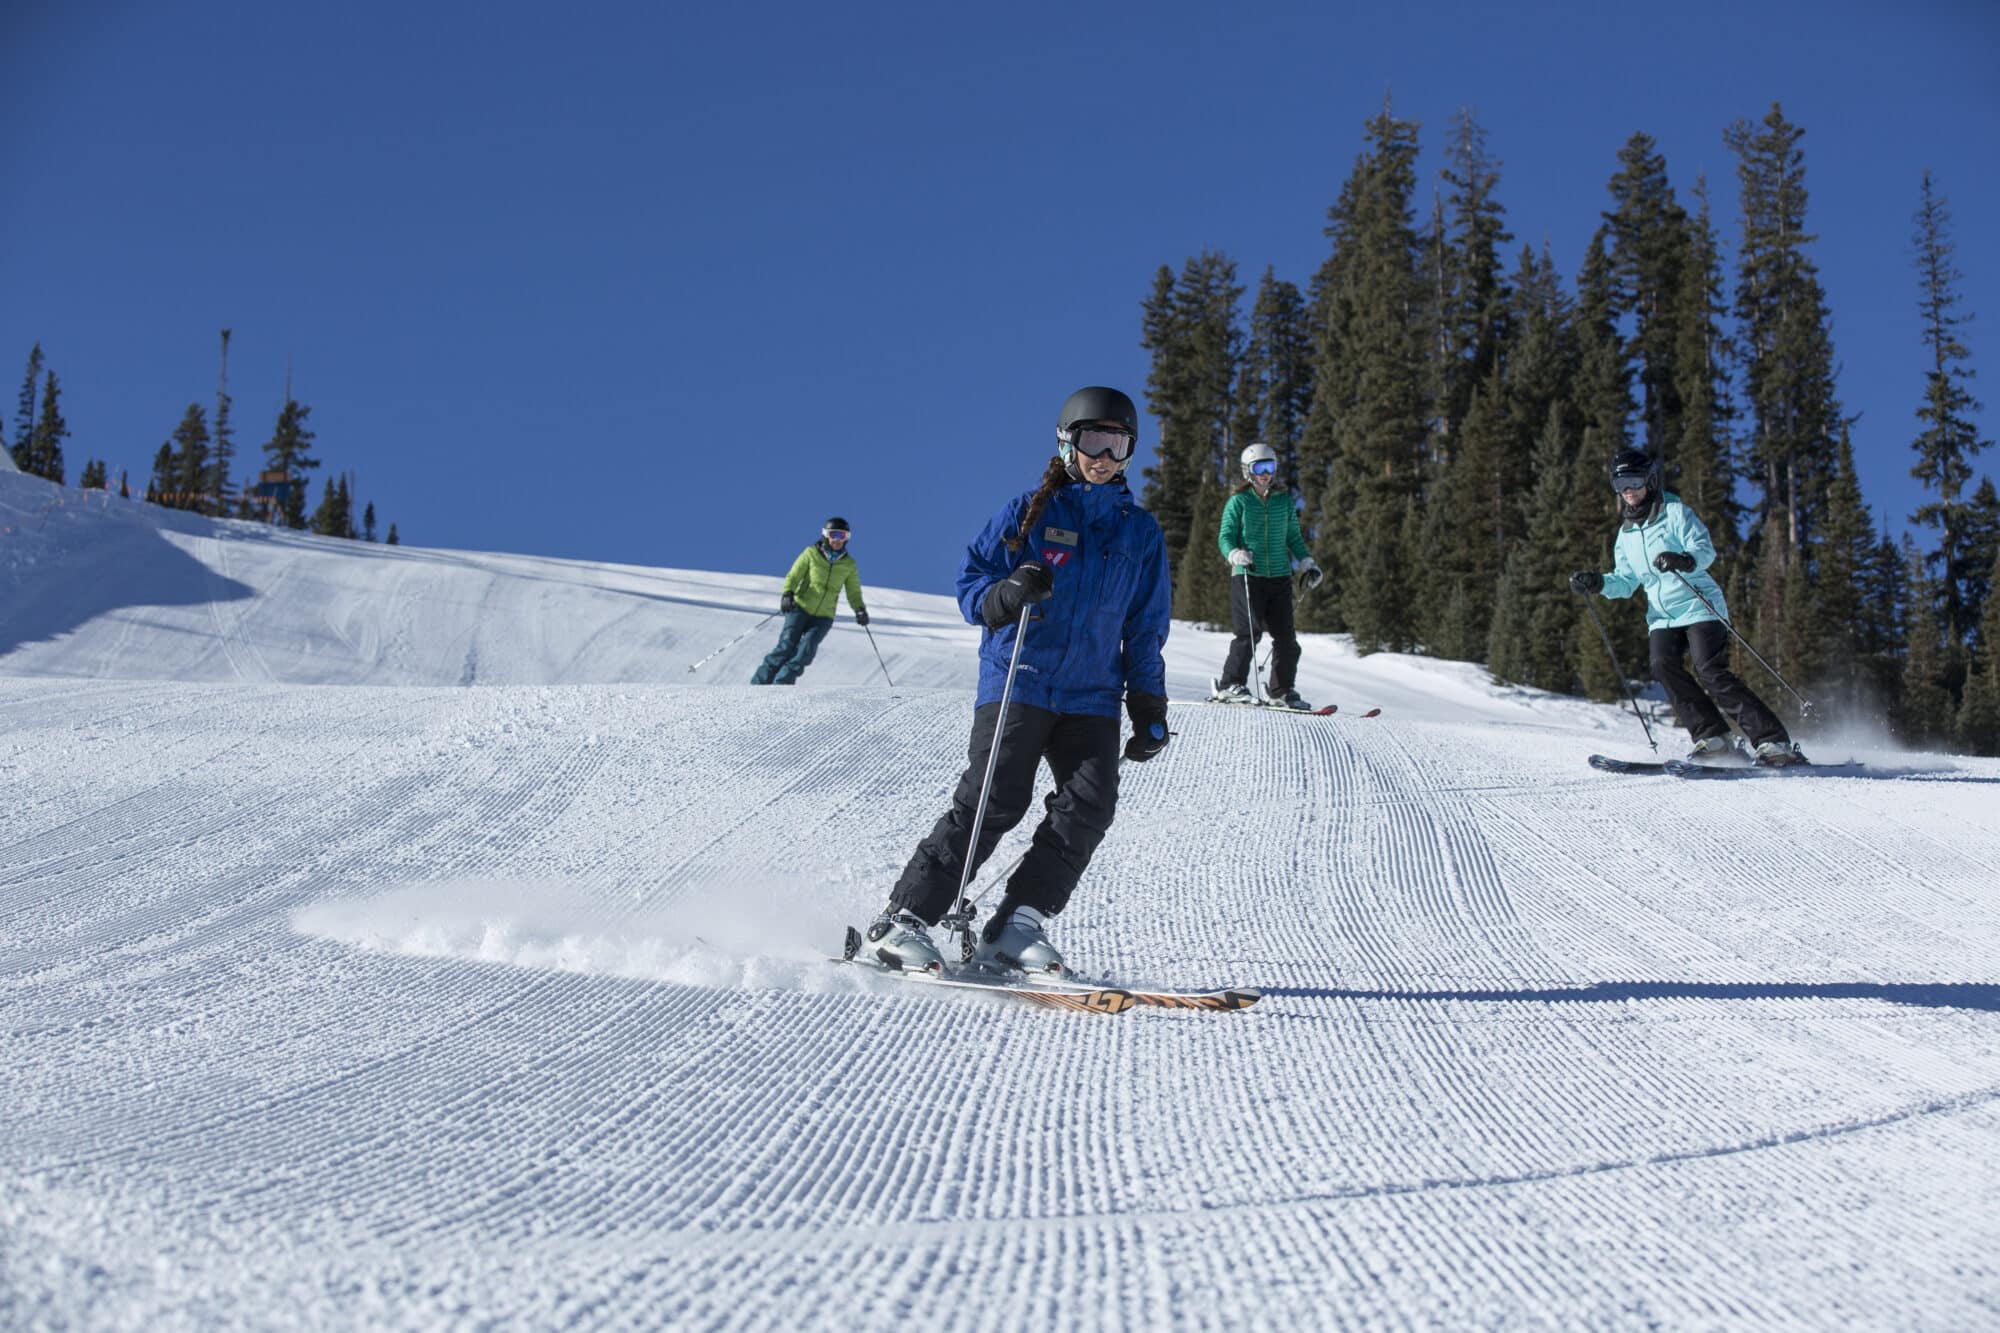 Ski instructor lead her group down fresh corduroy